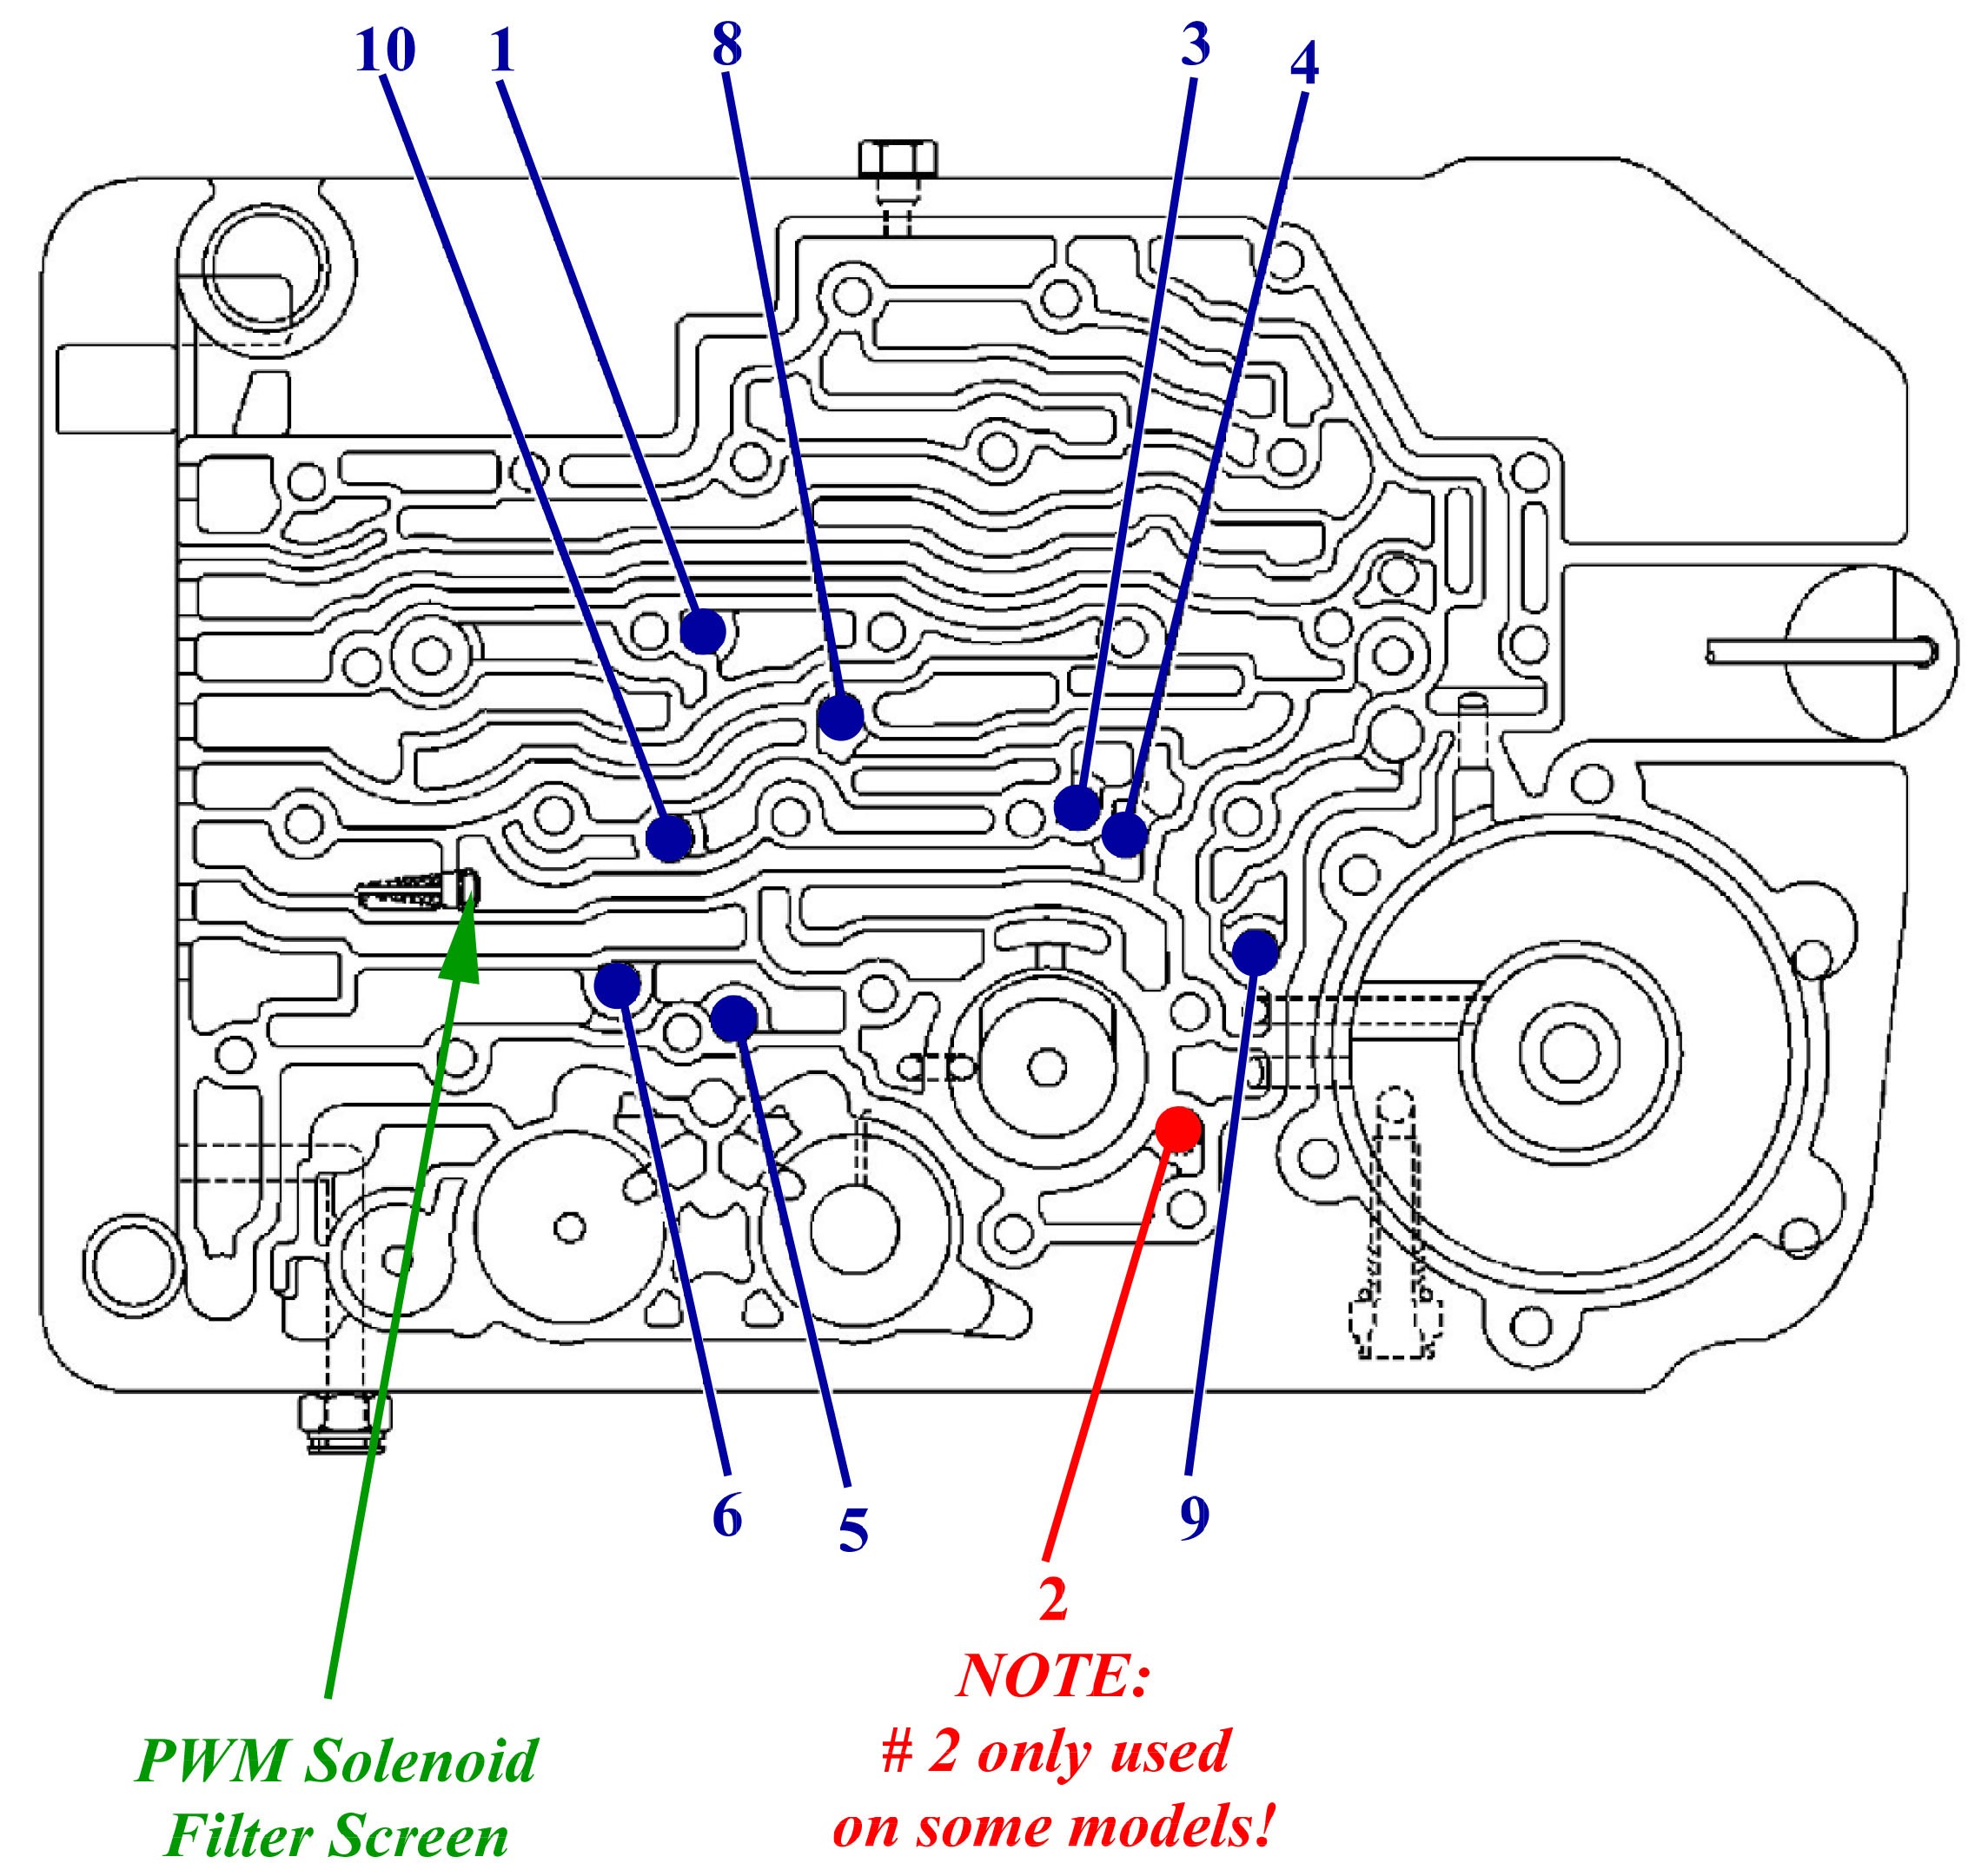 Car Parts Diagram Names 4r100 Transmission Valve Body Diagram E4od Parts Diagram Wiring Of Car Parts Diagram Names